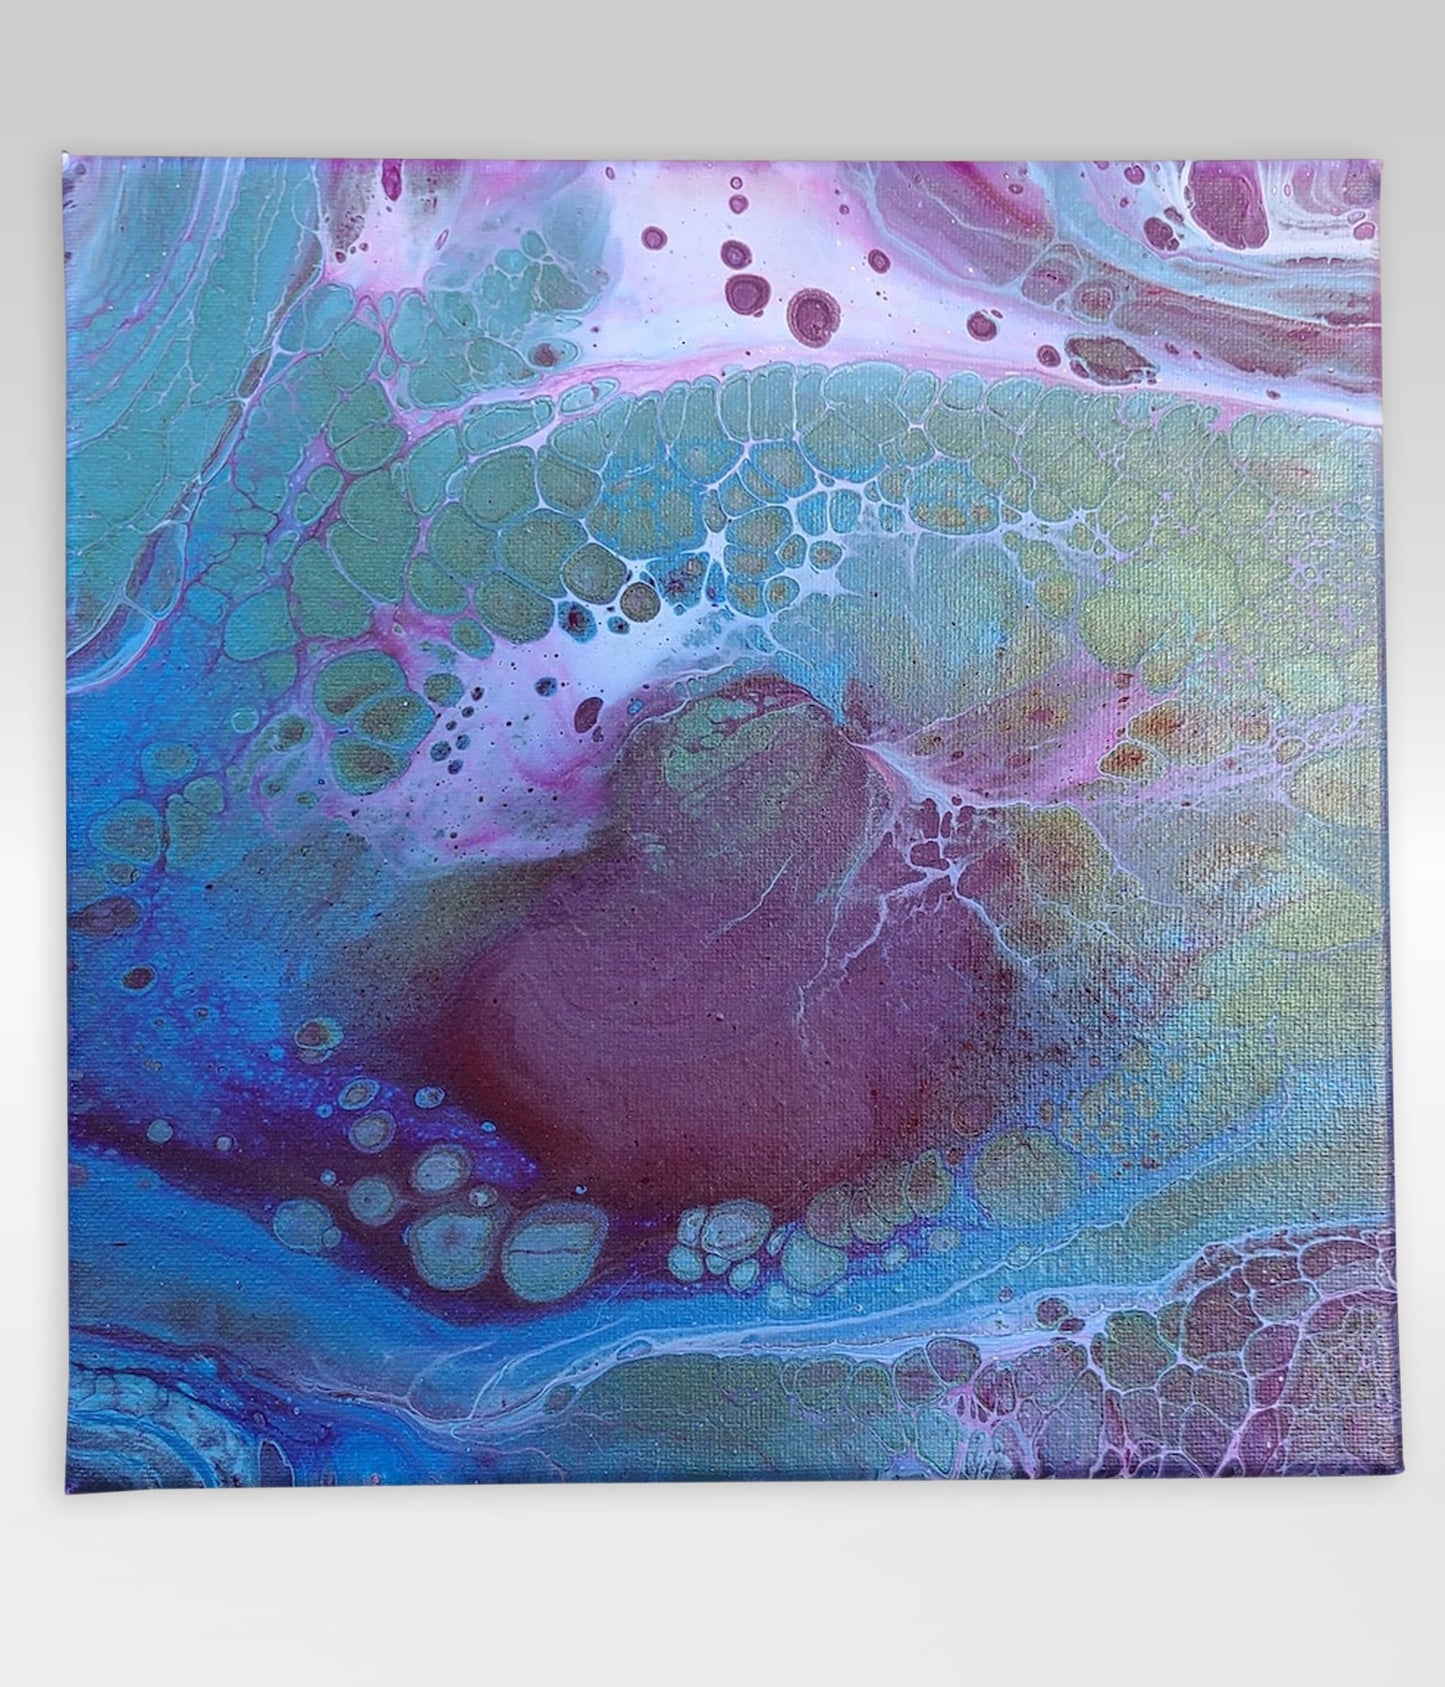 Slurpee – 10 x 10 Acrylic Pour Painting On Canvas